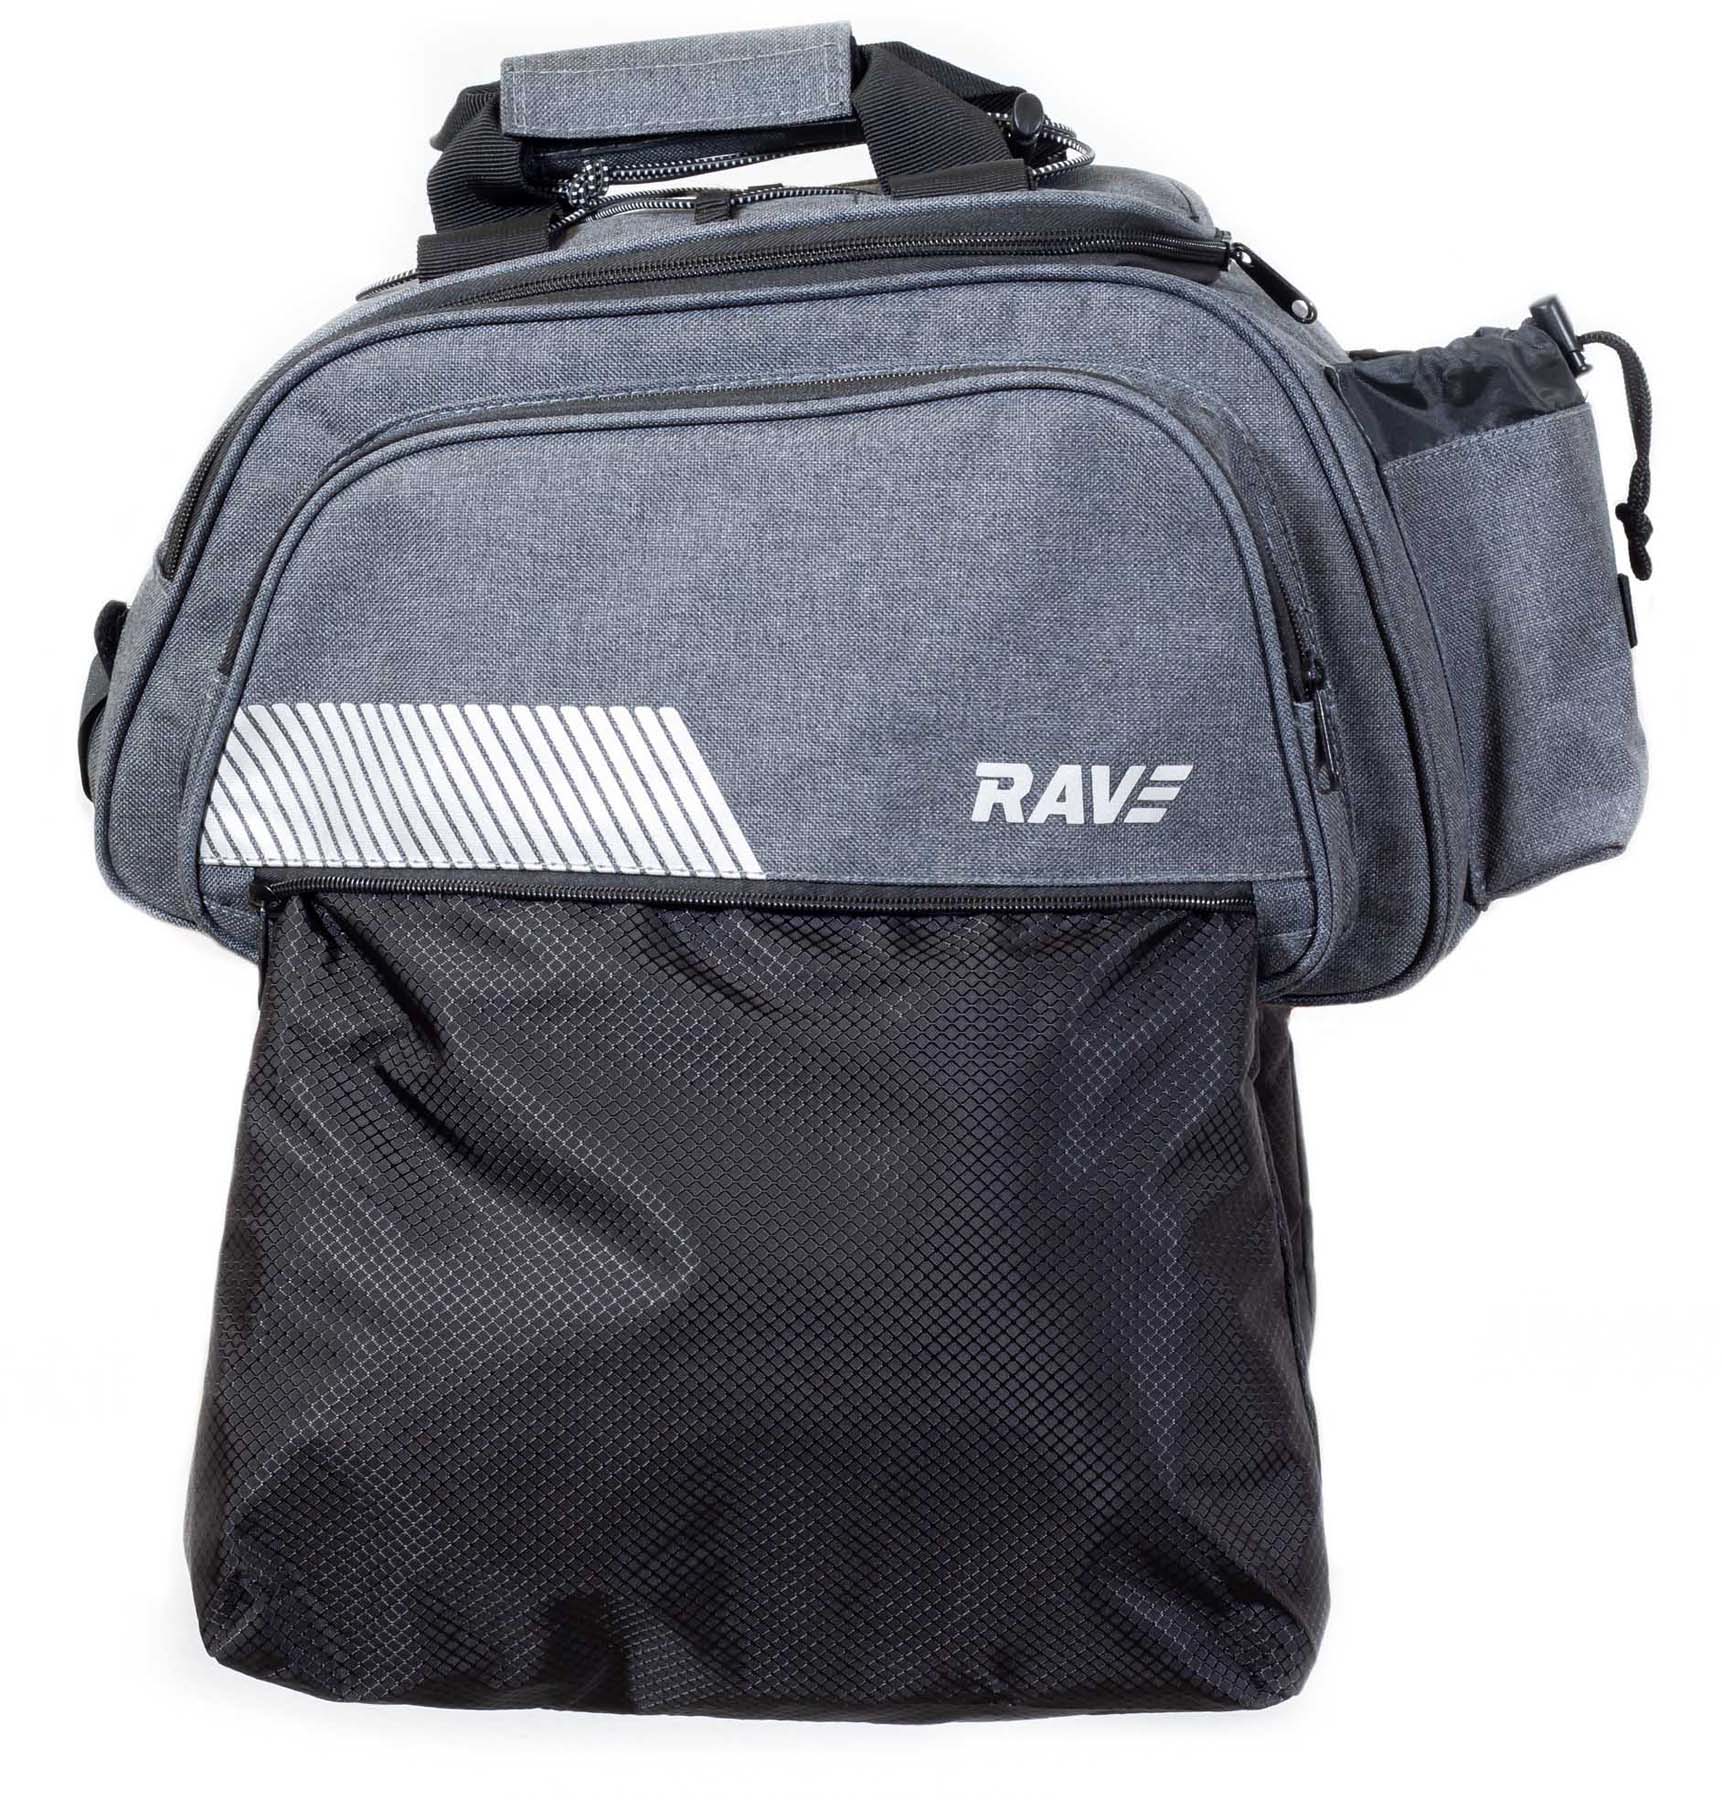 Rave luggage carrier bag - cooler bag approx. 5 liters